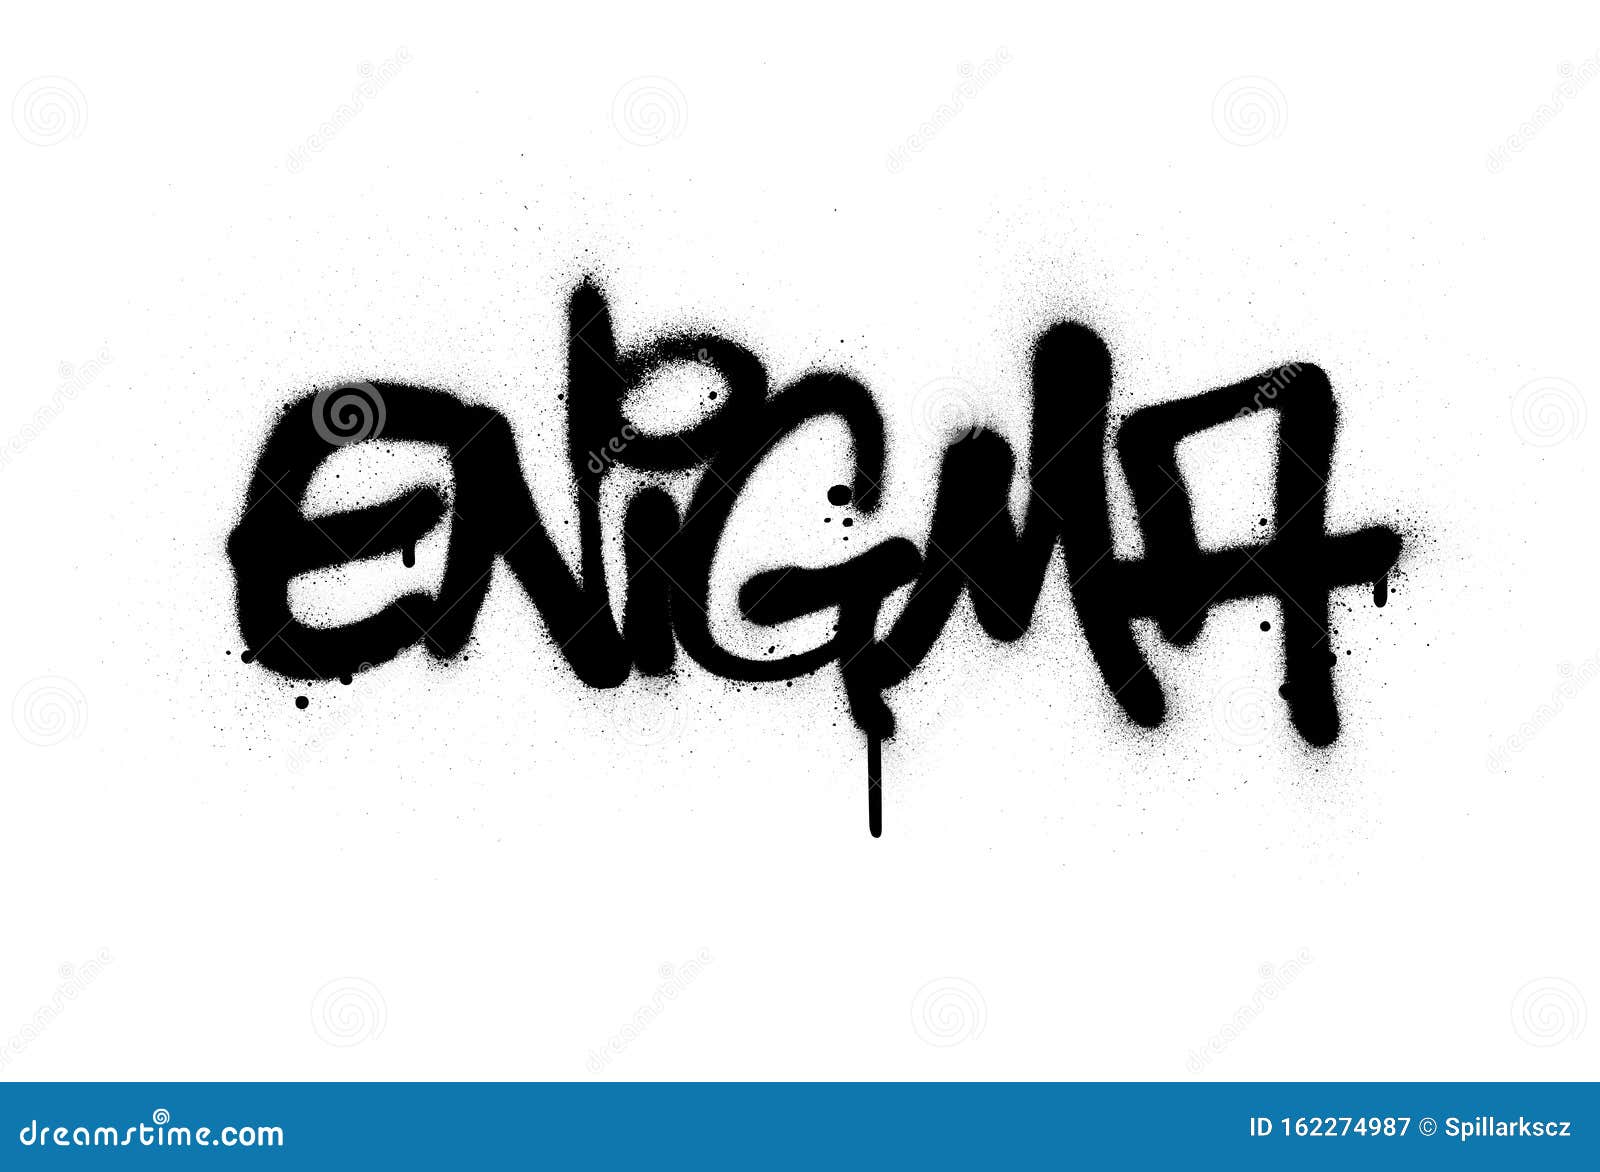 graffiti enigma word sprayed in black over white